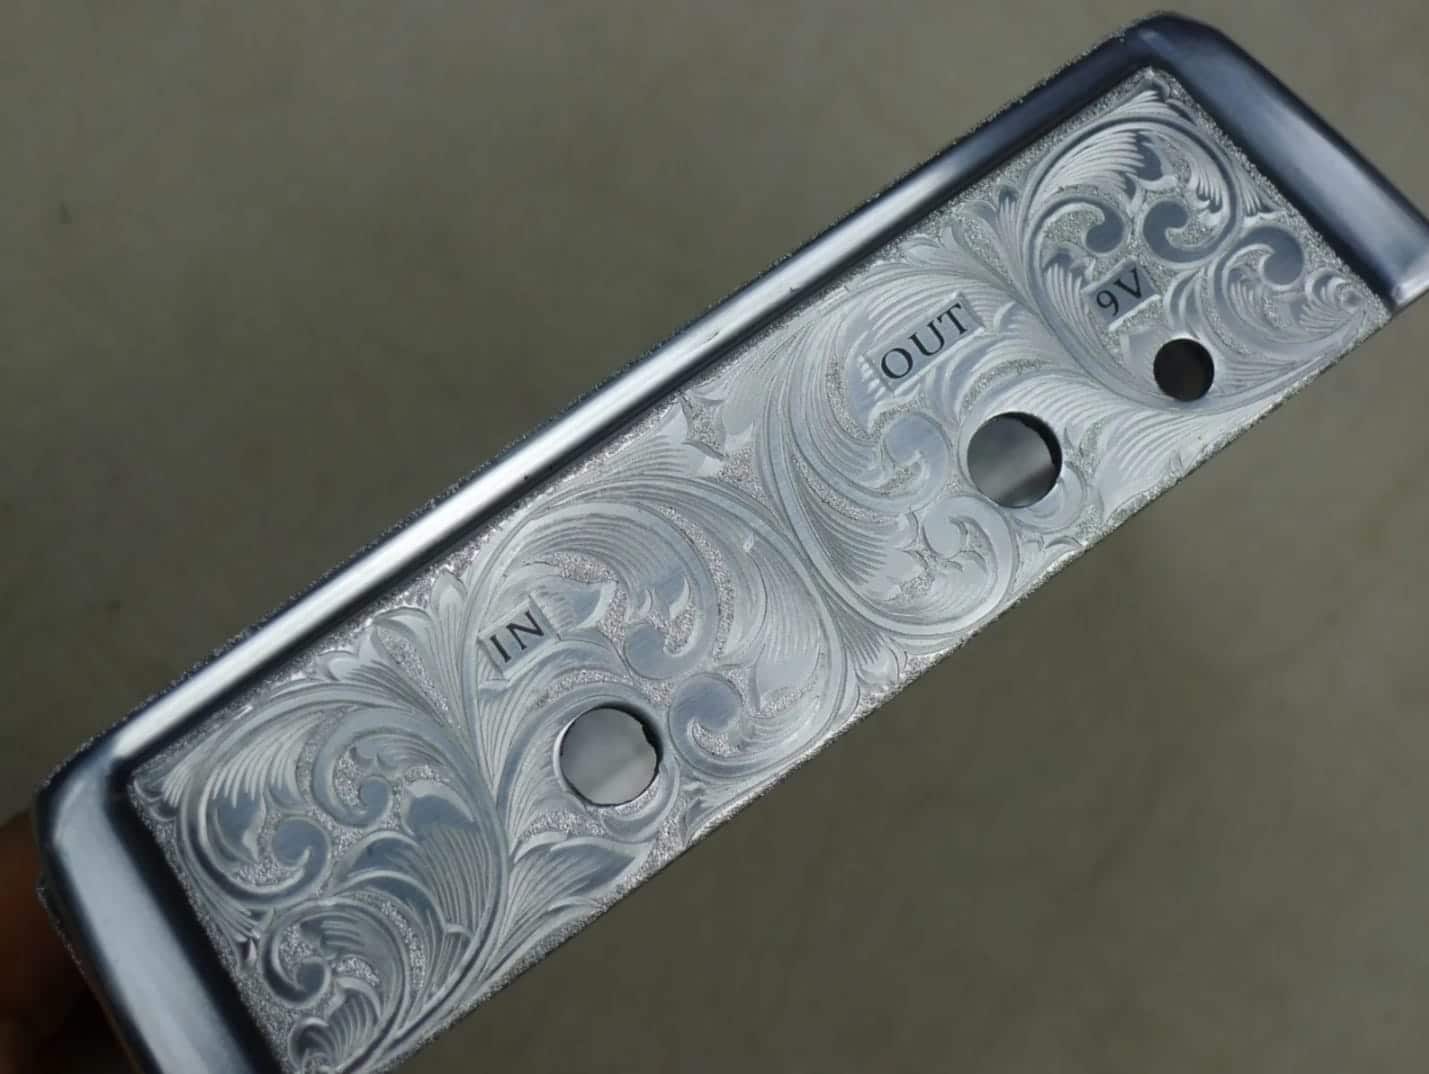 Klon Centaur Engraved pedal